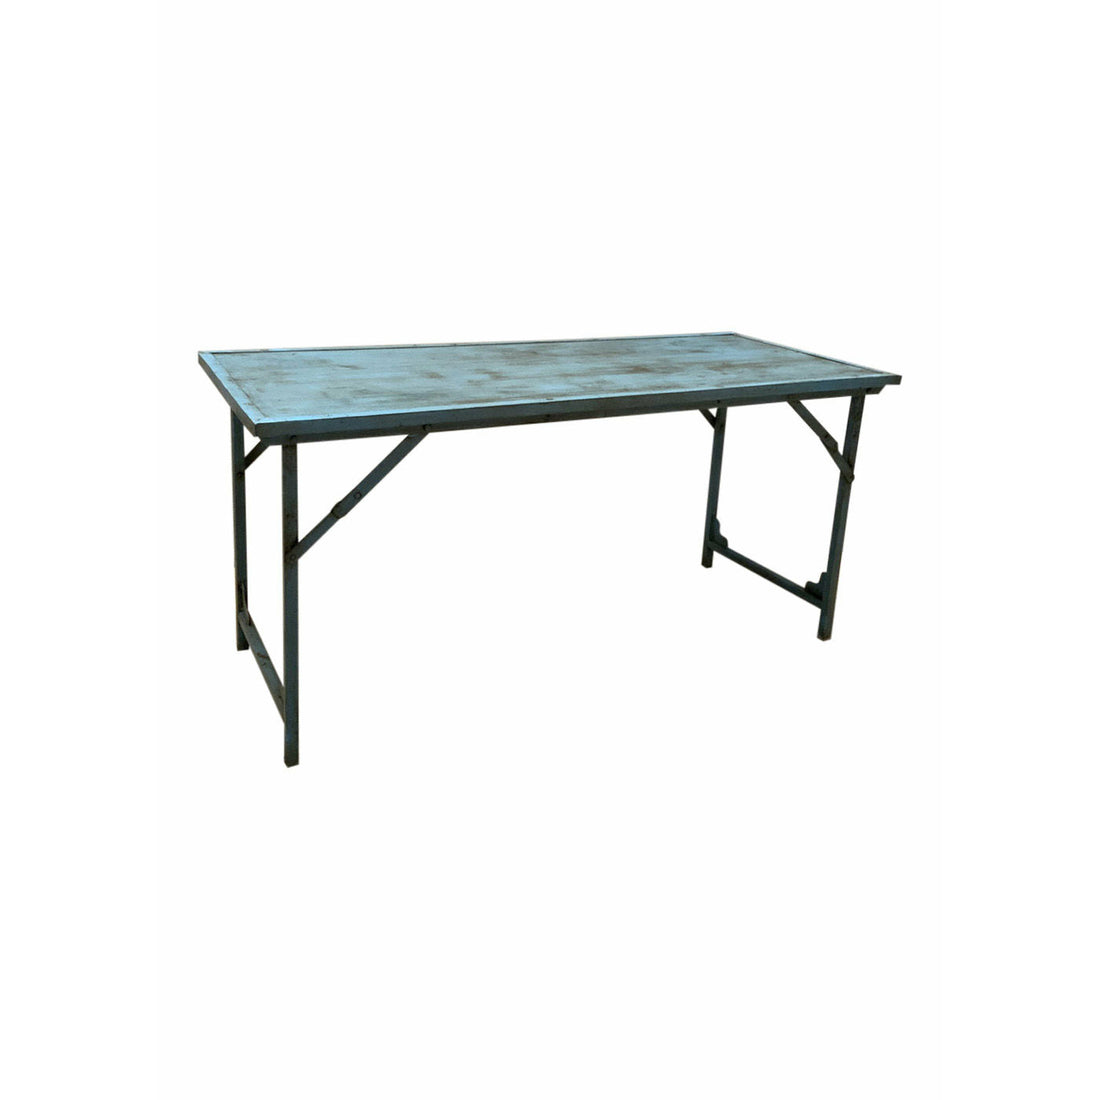 SJÆLSØ Nordic Original Folding Table - Light Blue